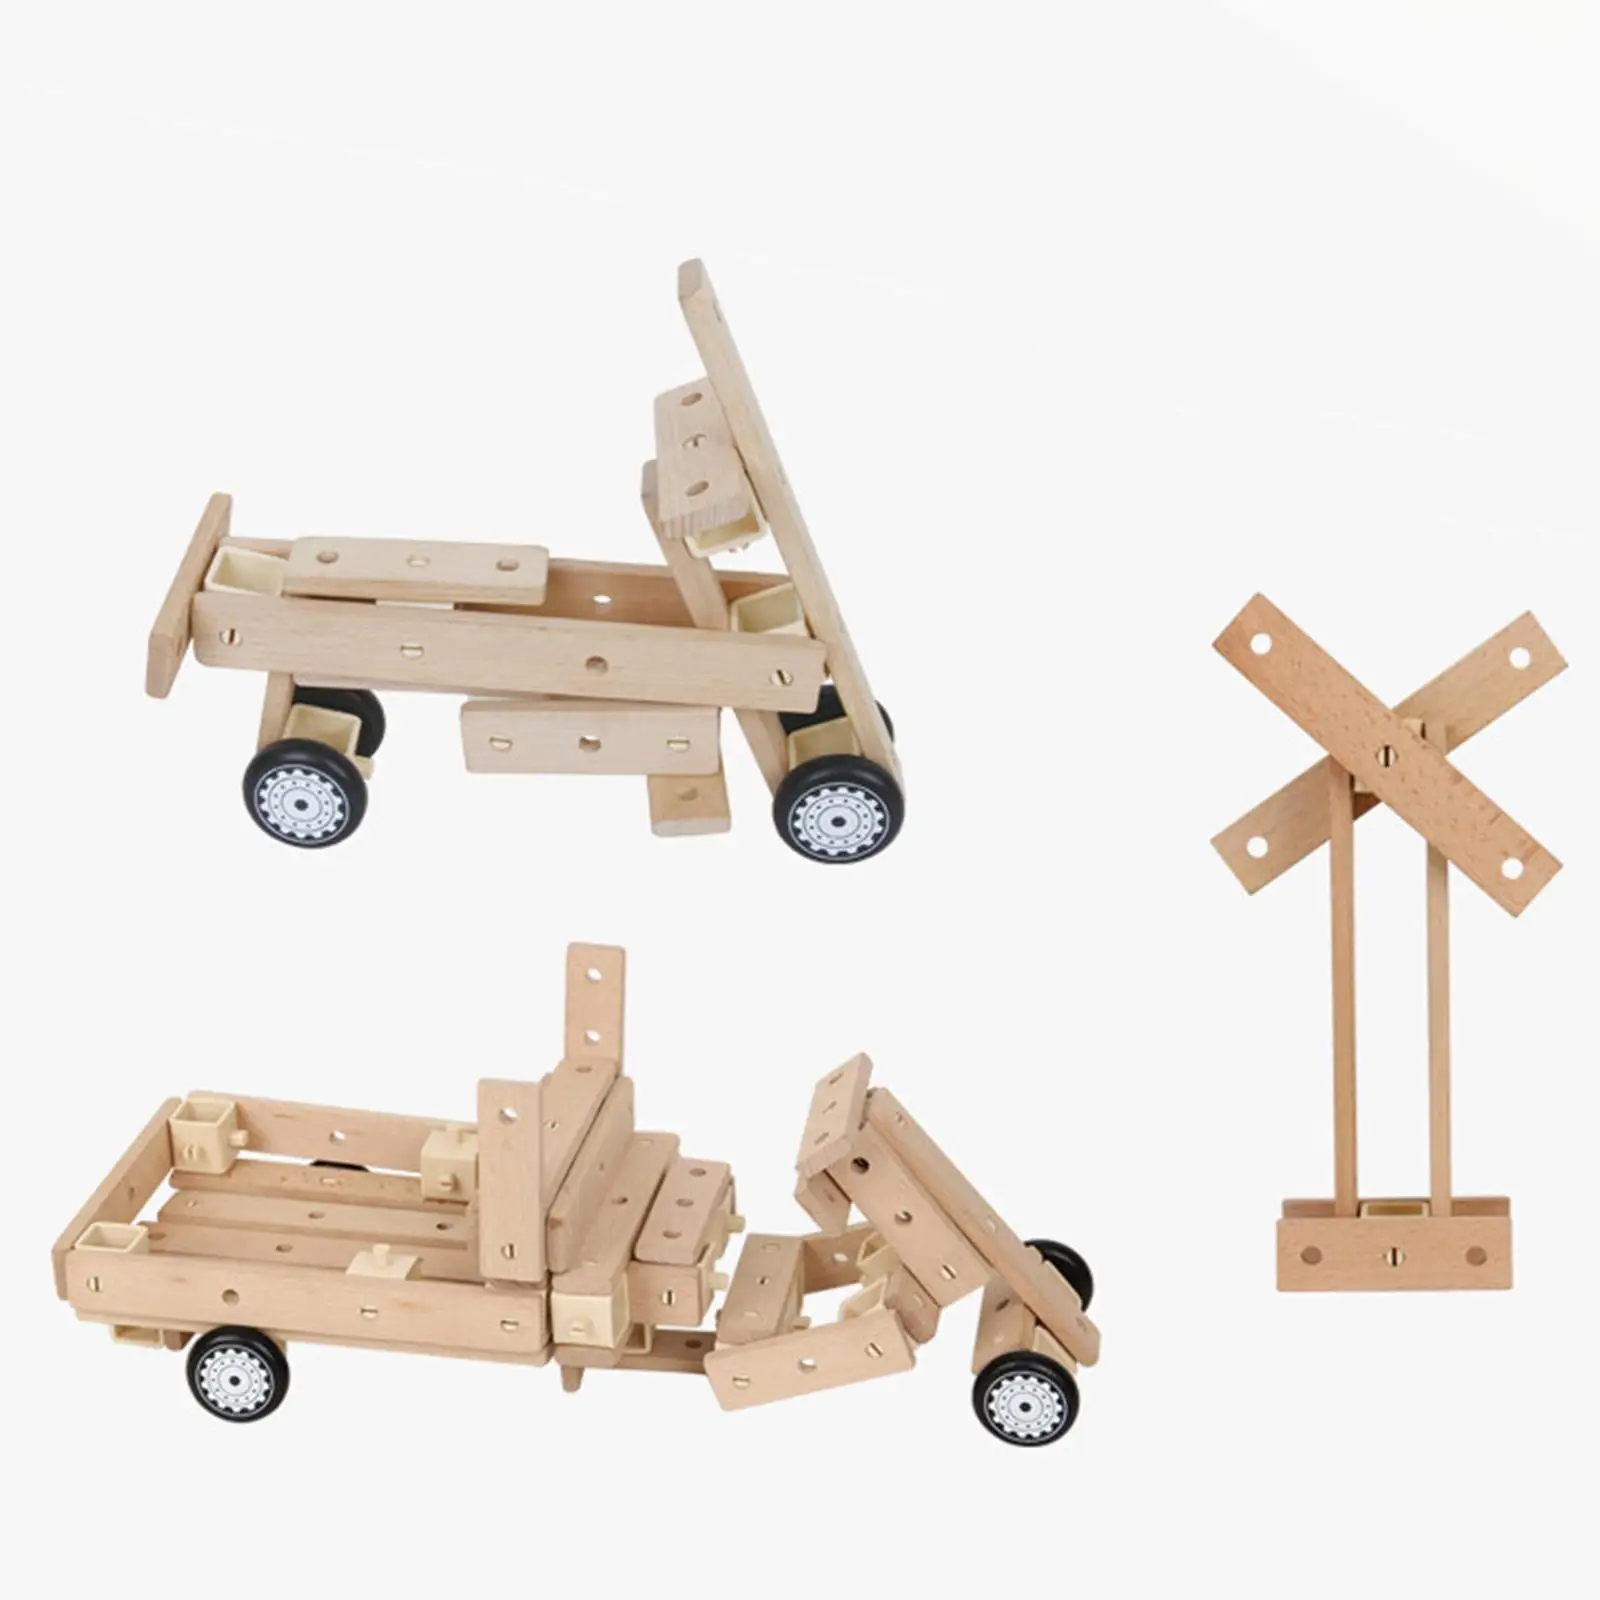 Wooden Building Blocks Set Wood Planks Set Wood Stacking Blocks Set for Child Preschool